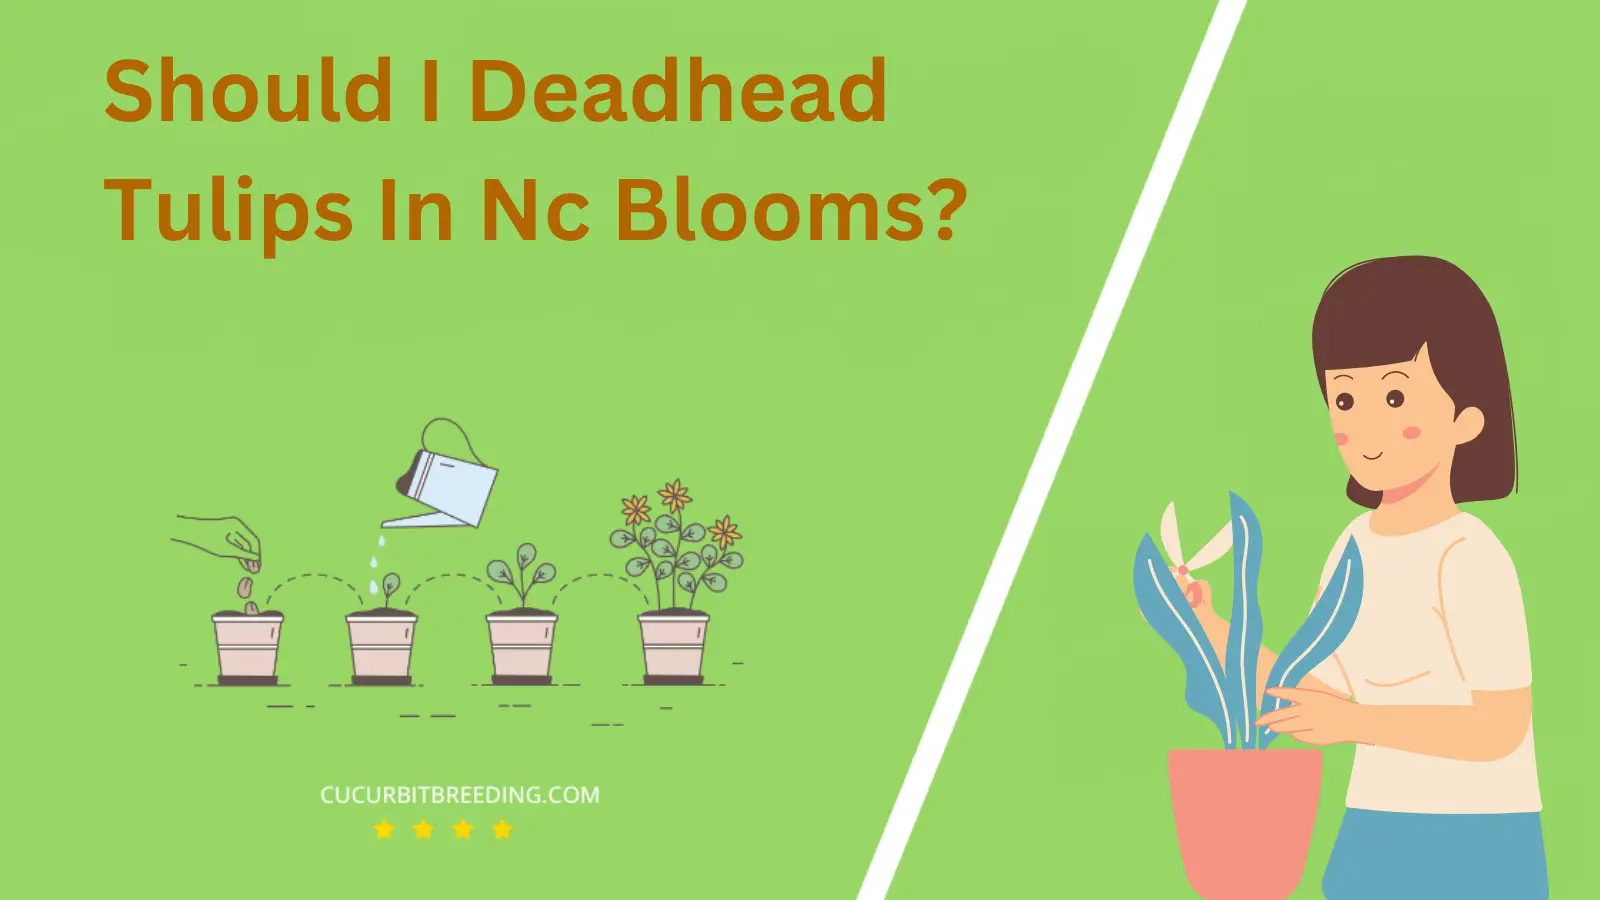 Should I Deadhead Tulips In Nc Blooms?